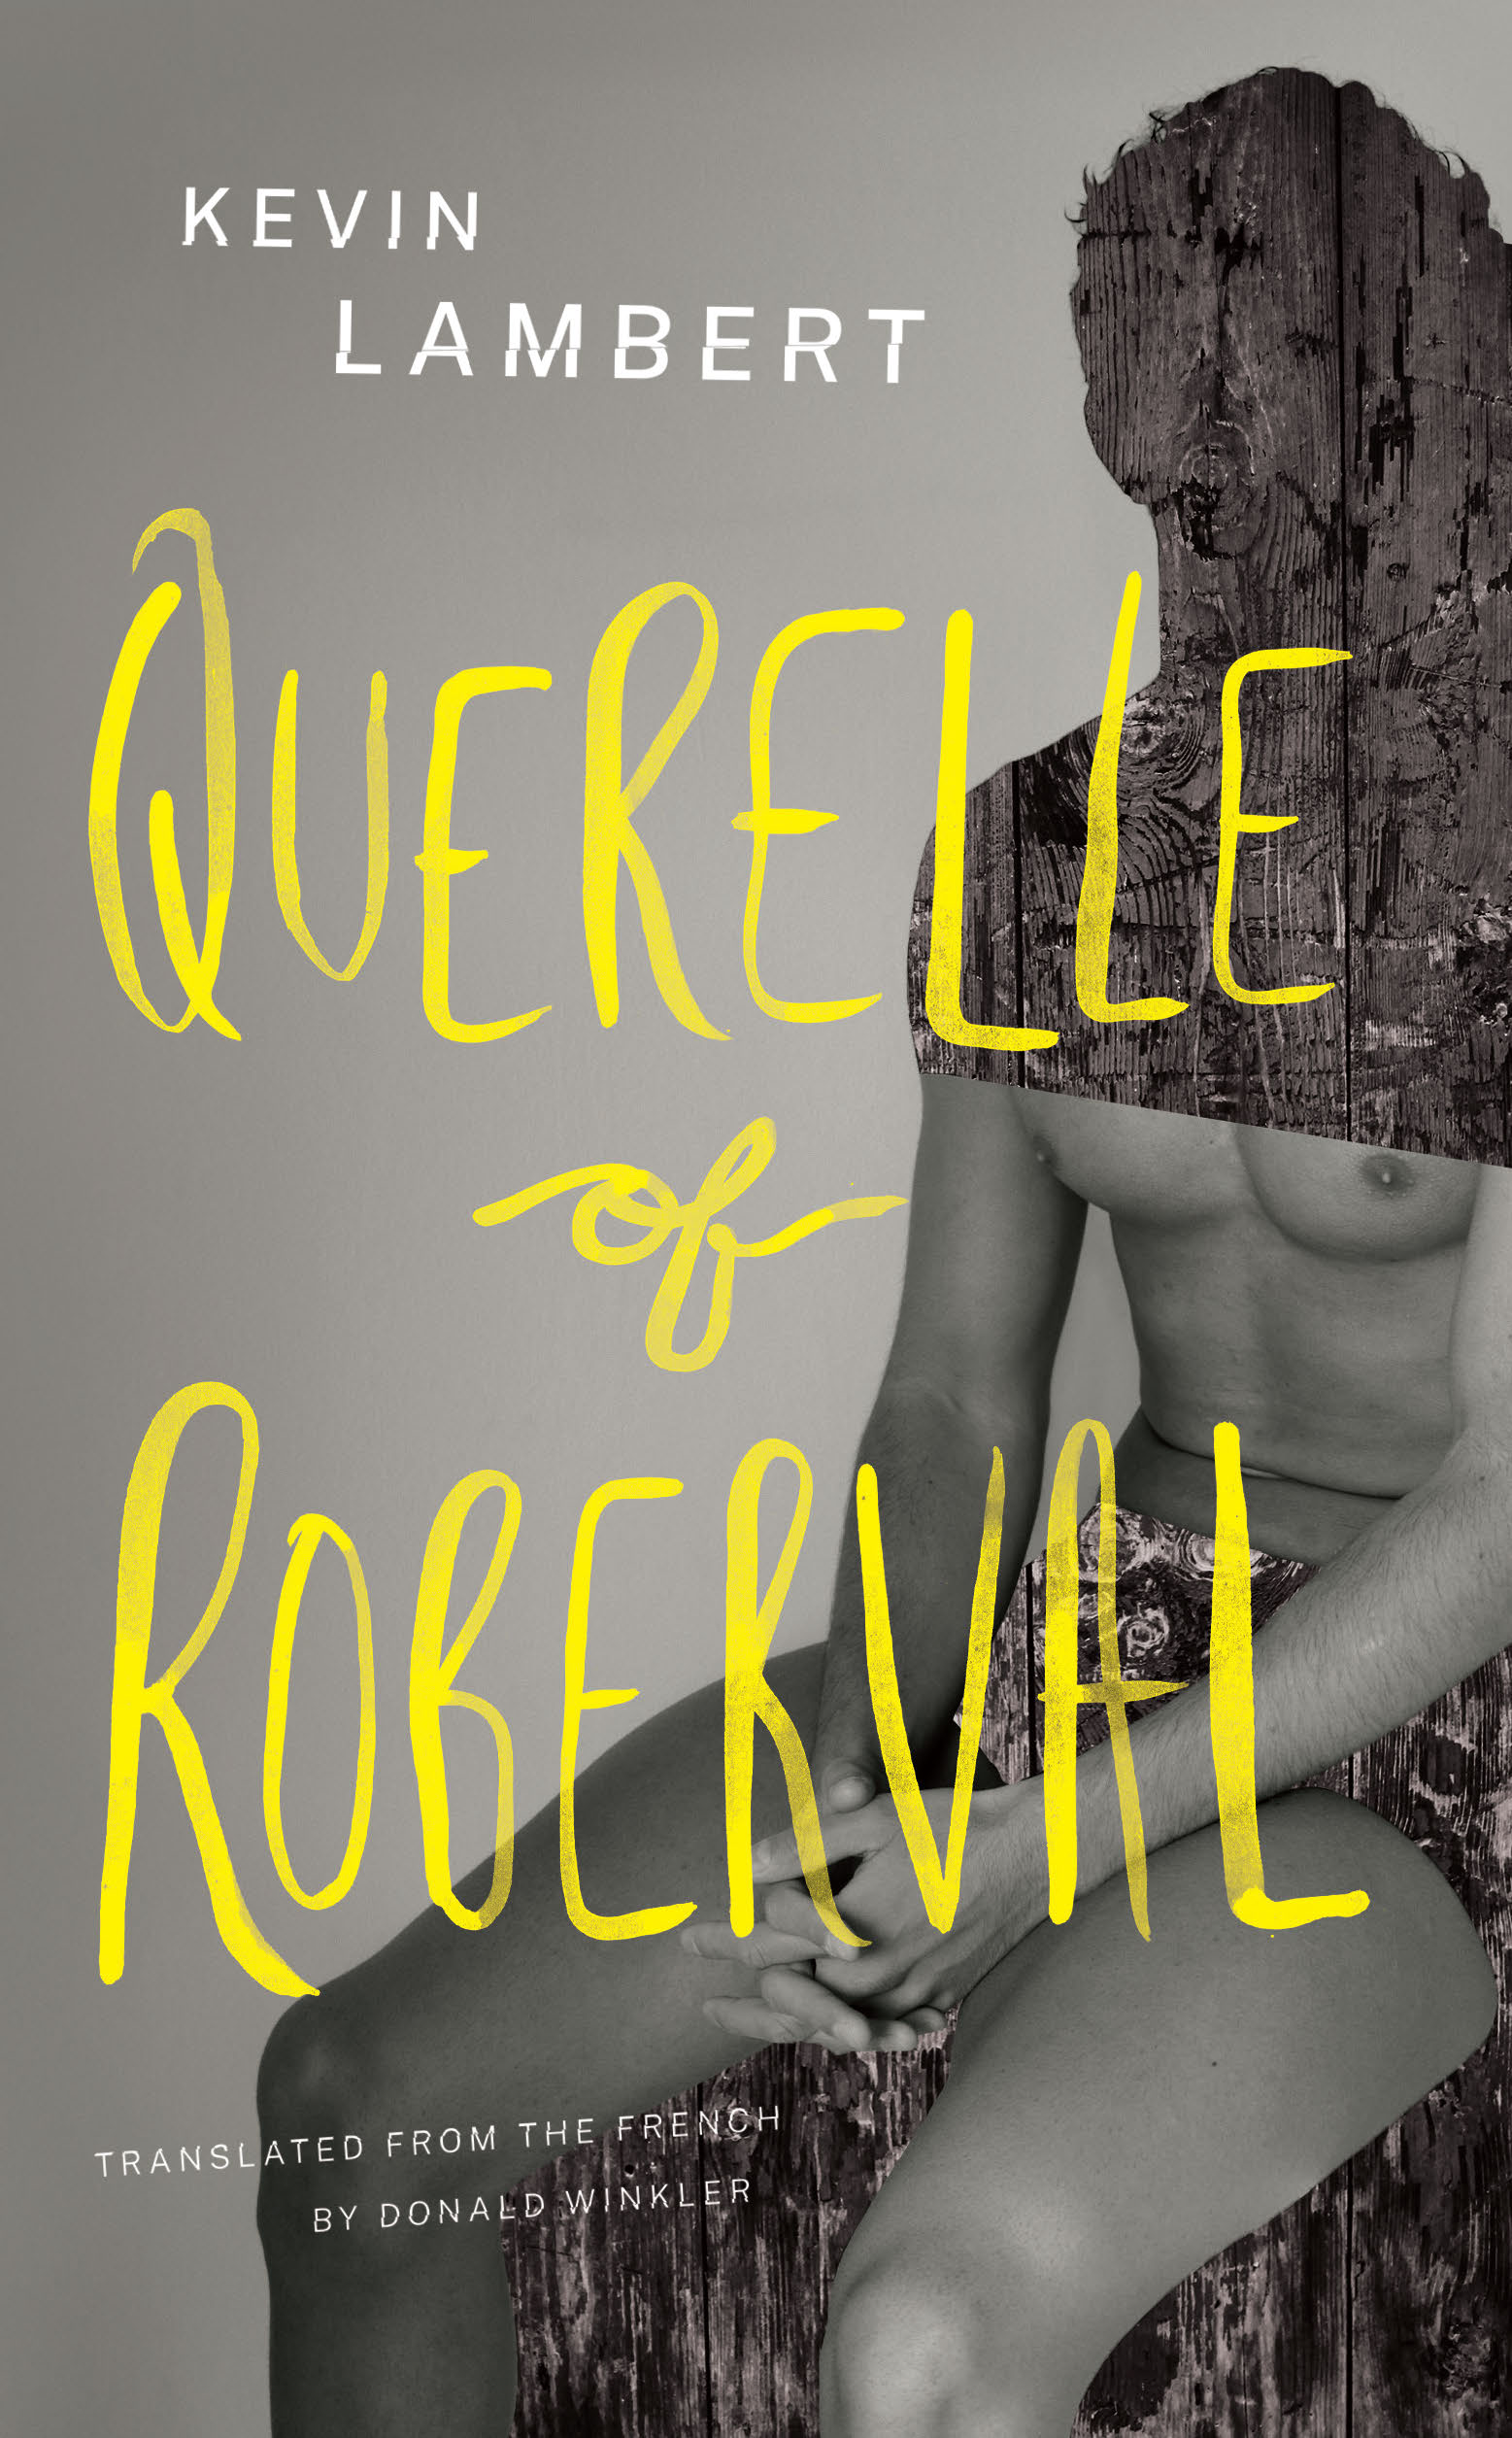 Kevin Lambert’s Querelle of Roberval